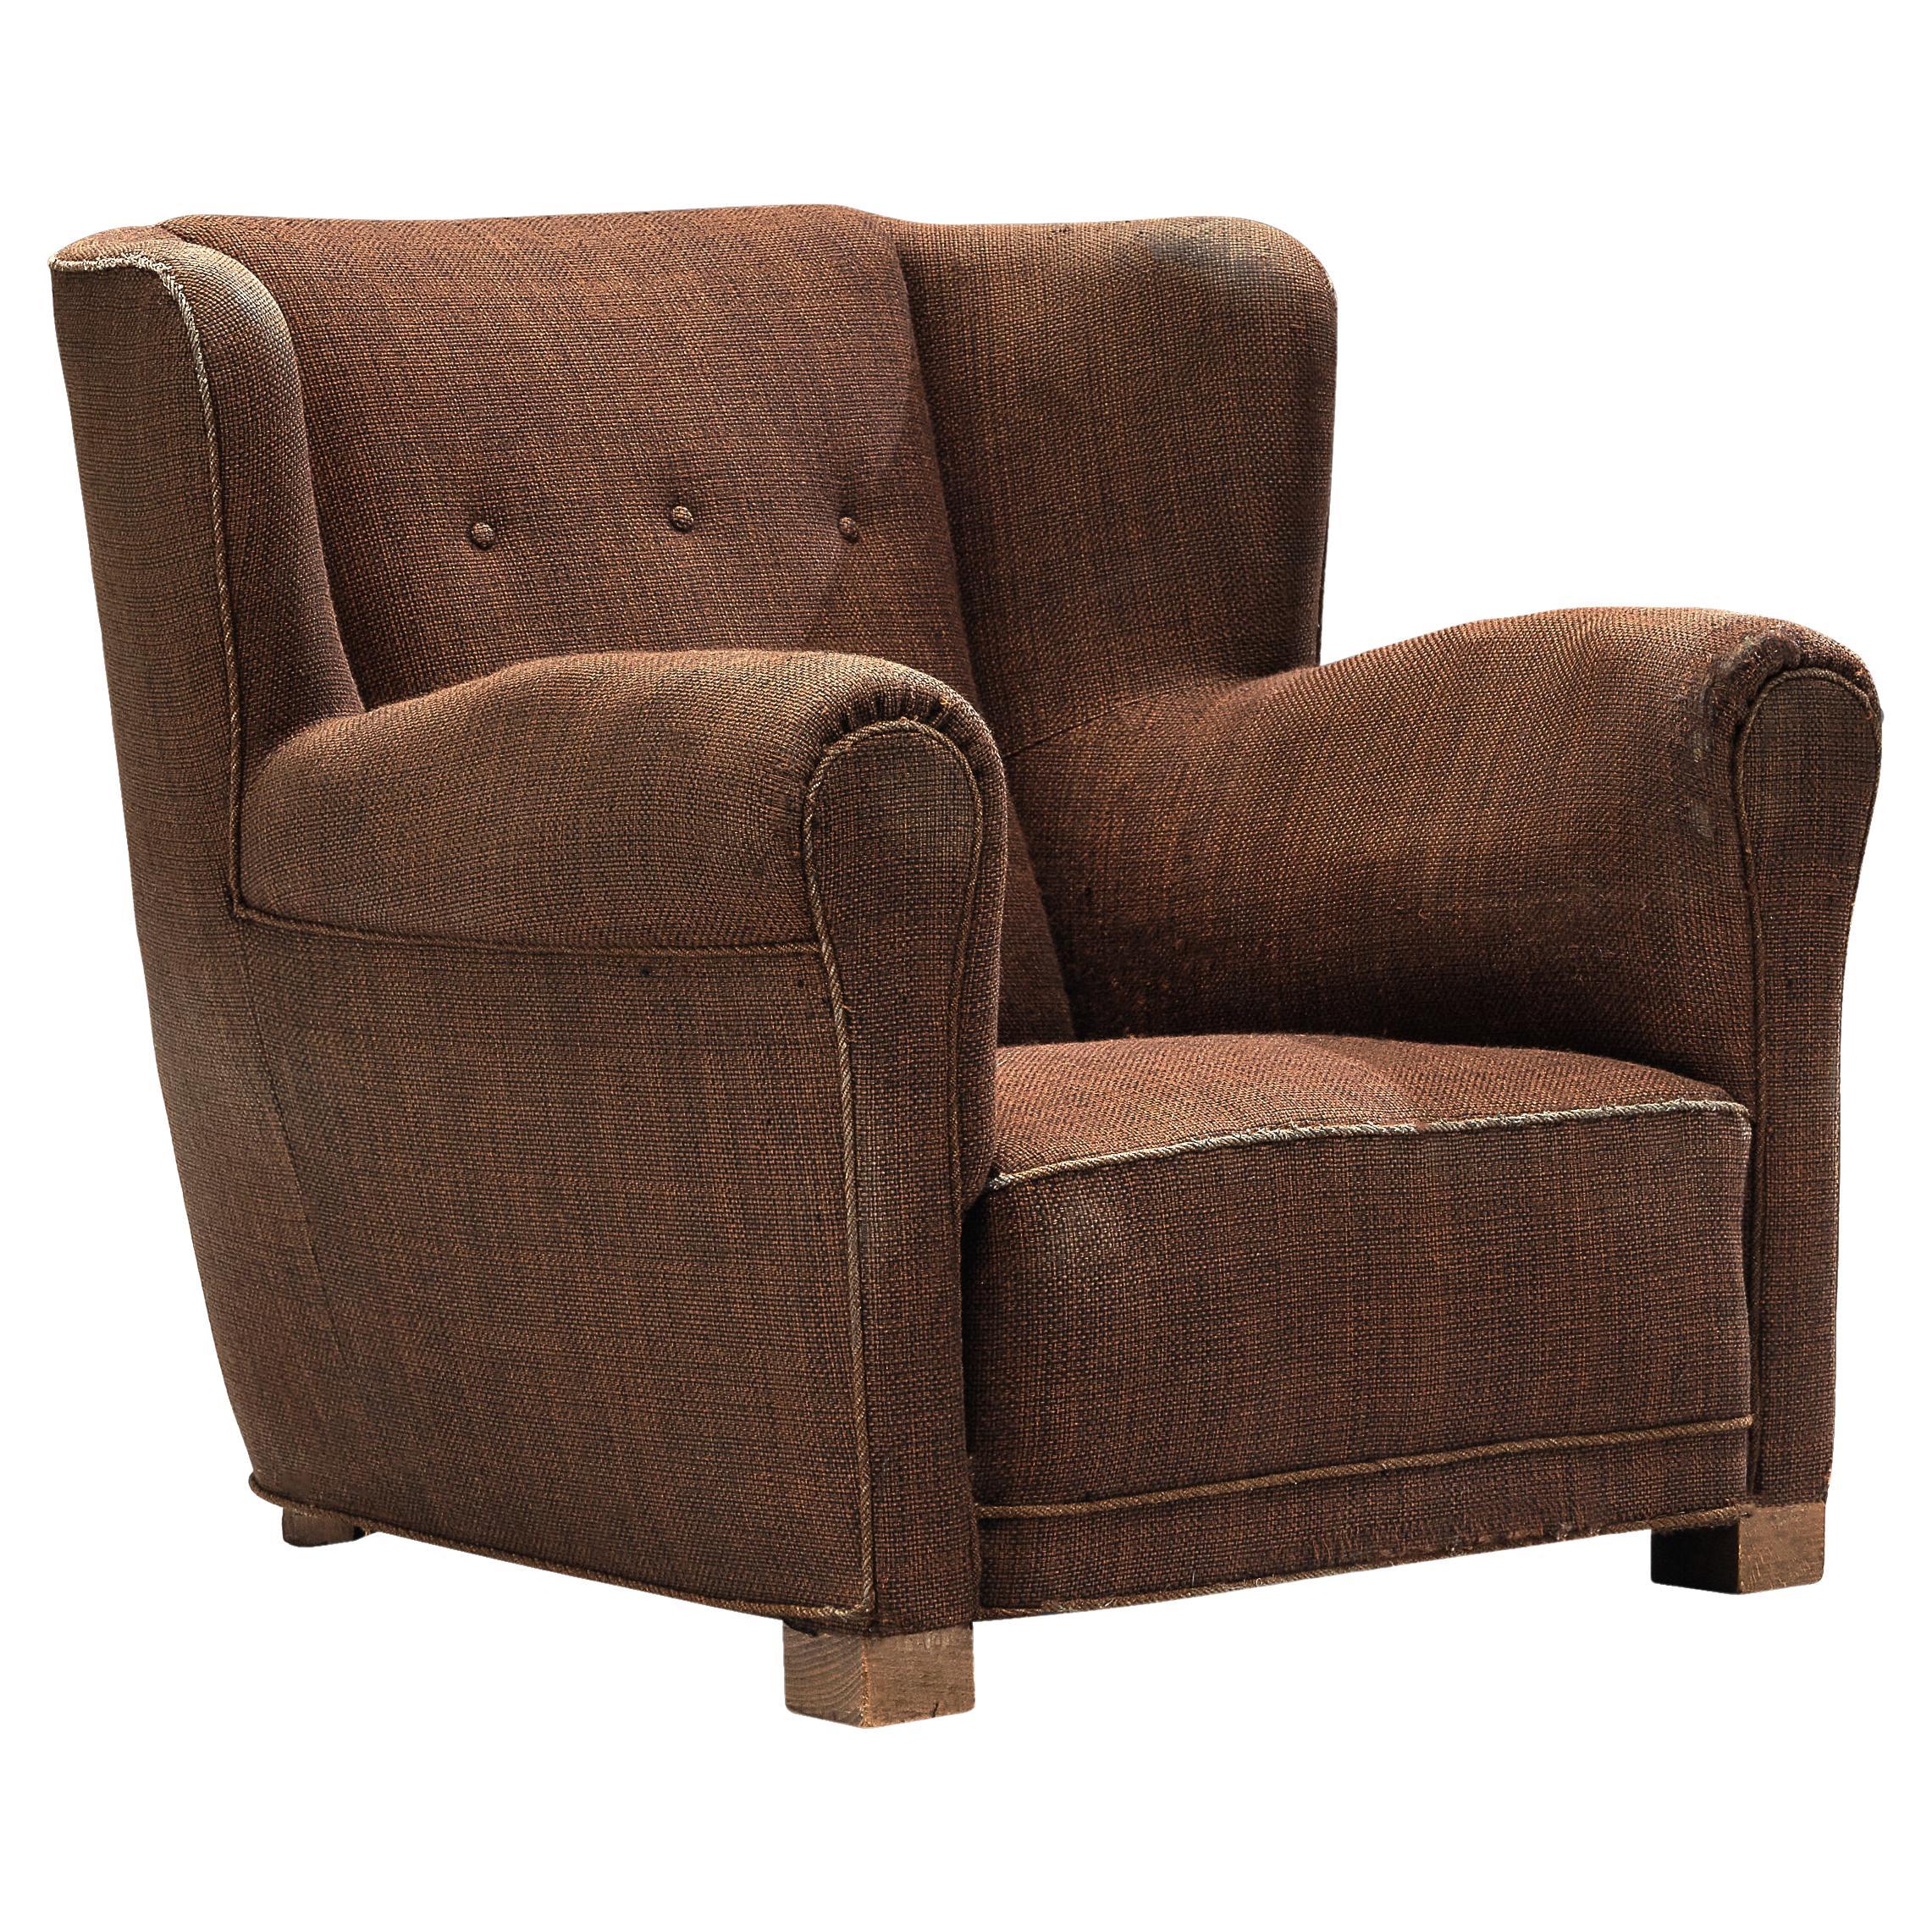 Bulky Danish Lounge Chair in Dark Brown Fabric